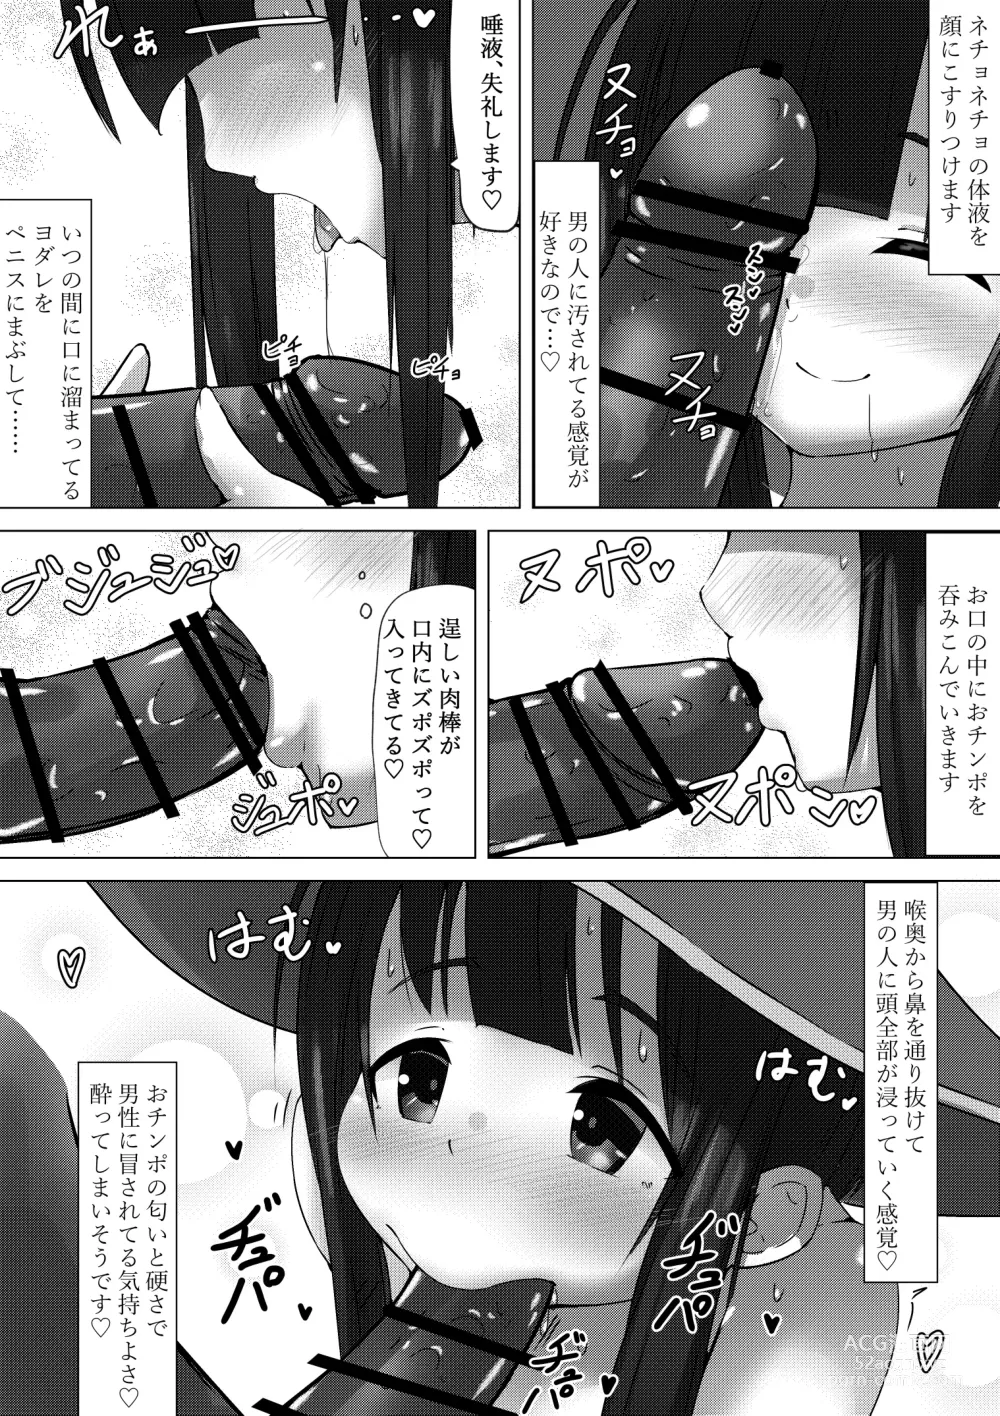 Page 5 of doujinshi Megumin ga Iinari Ero Refle na Hanashi